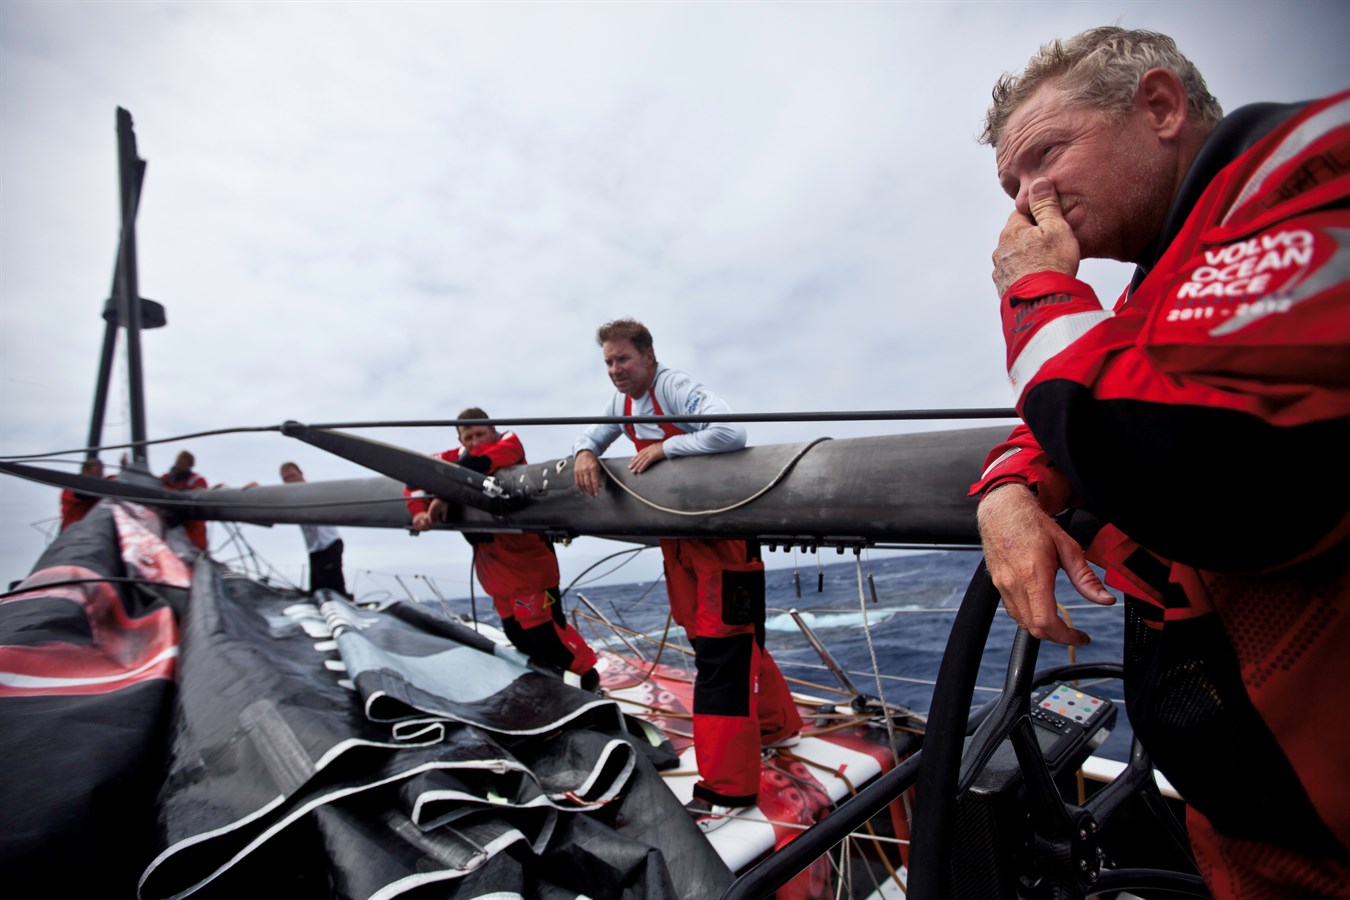 Puma Ocean Racing retires from first leg of Volvo Ocean Race, suffers from broken mast